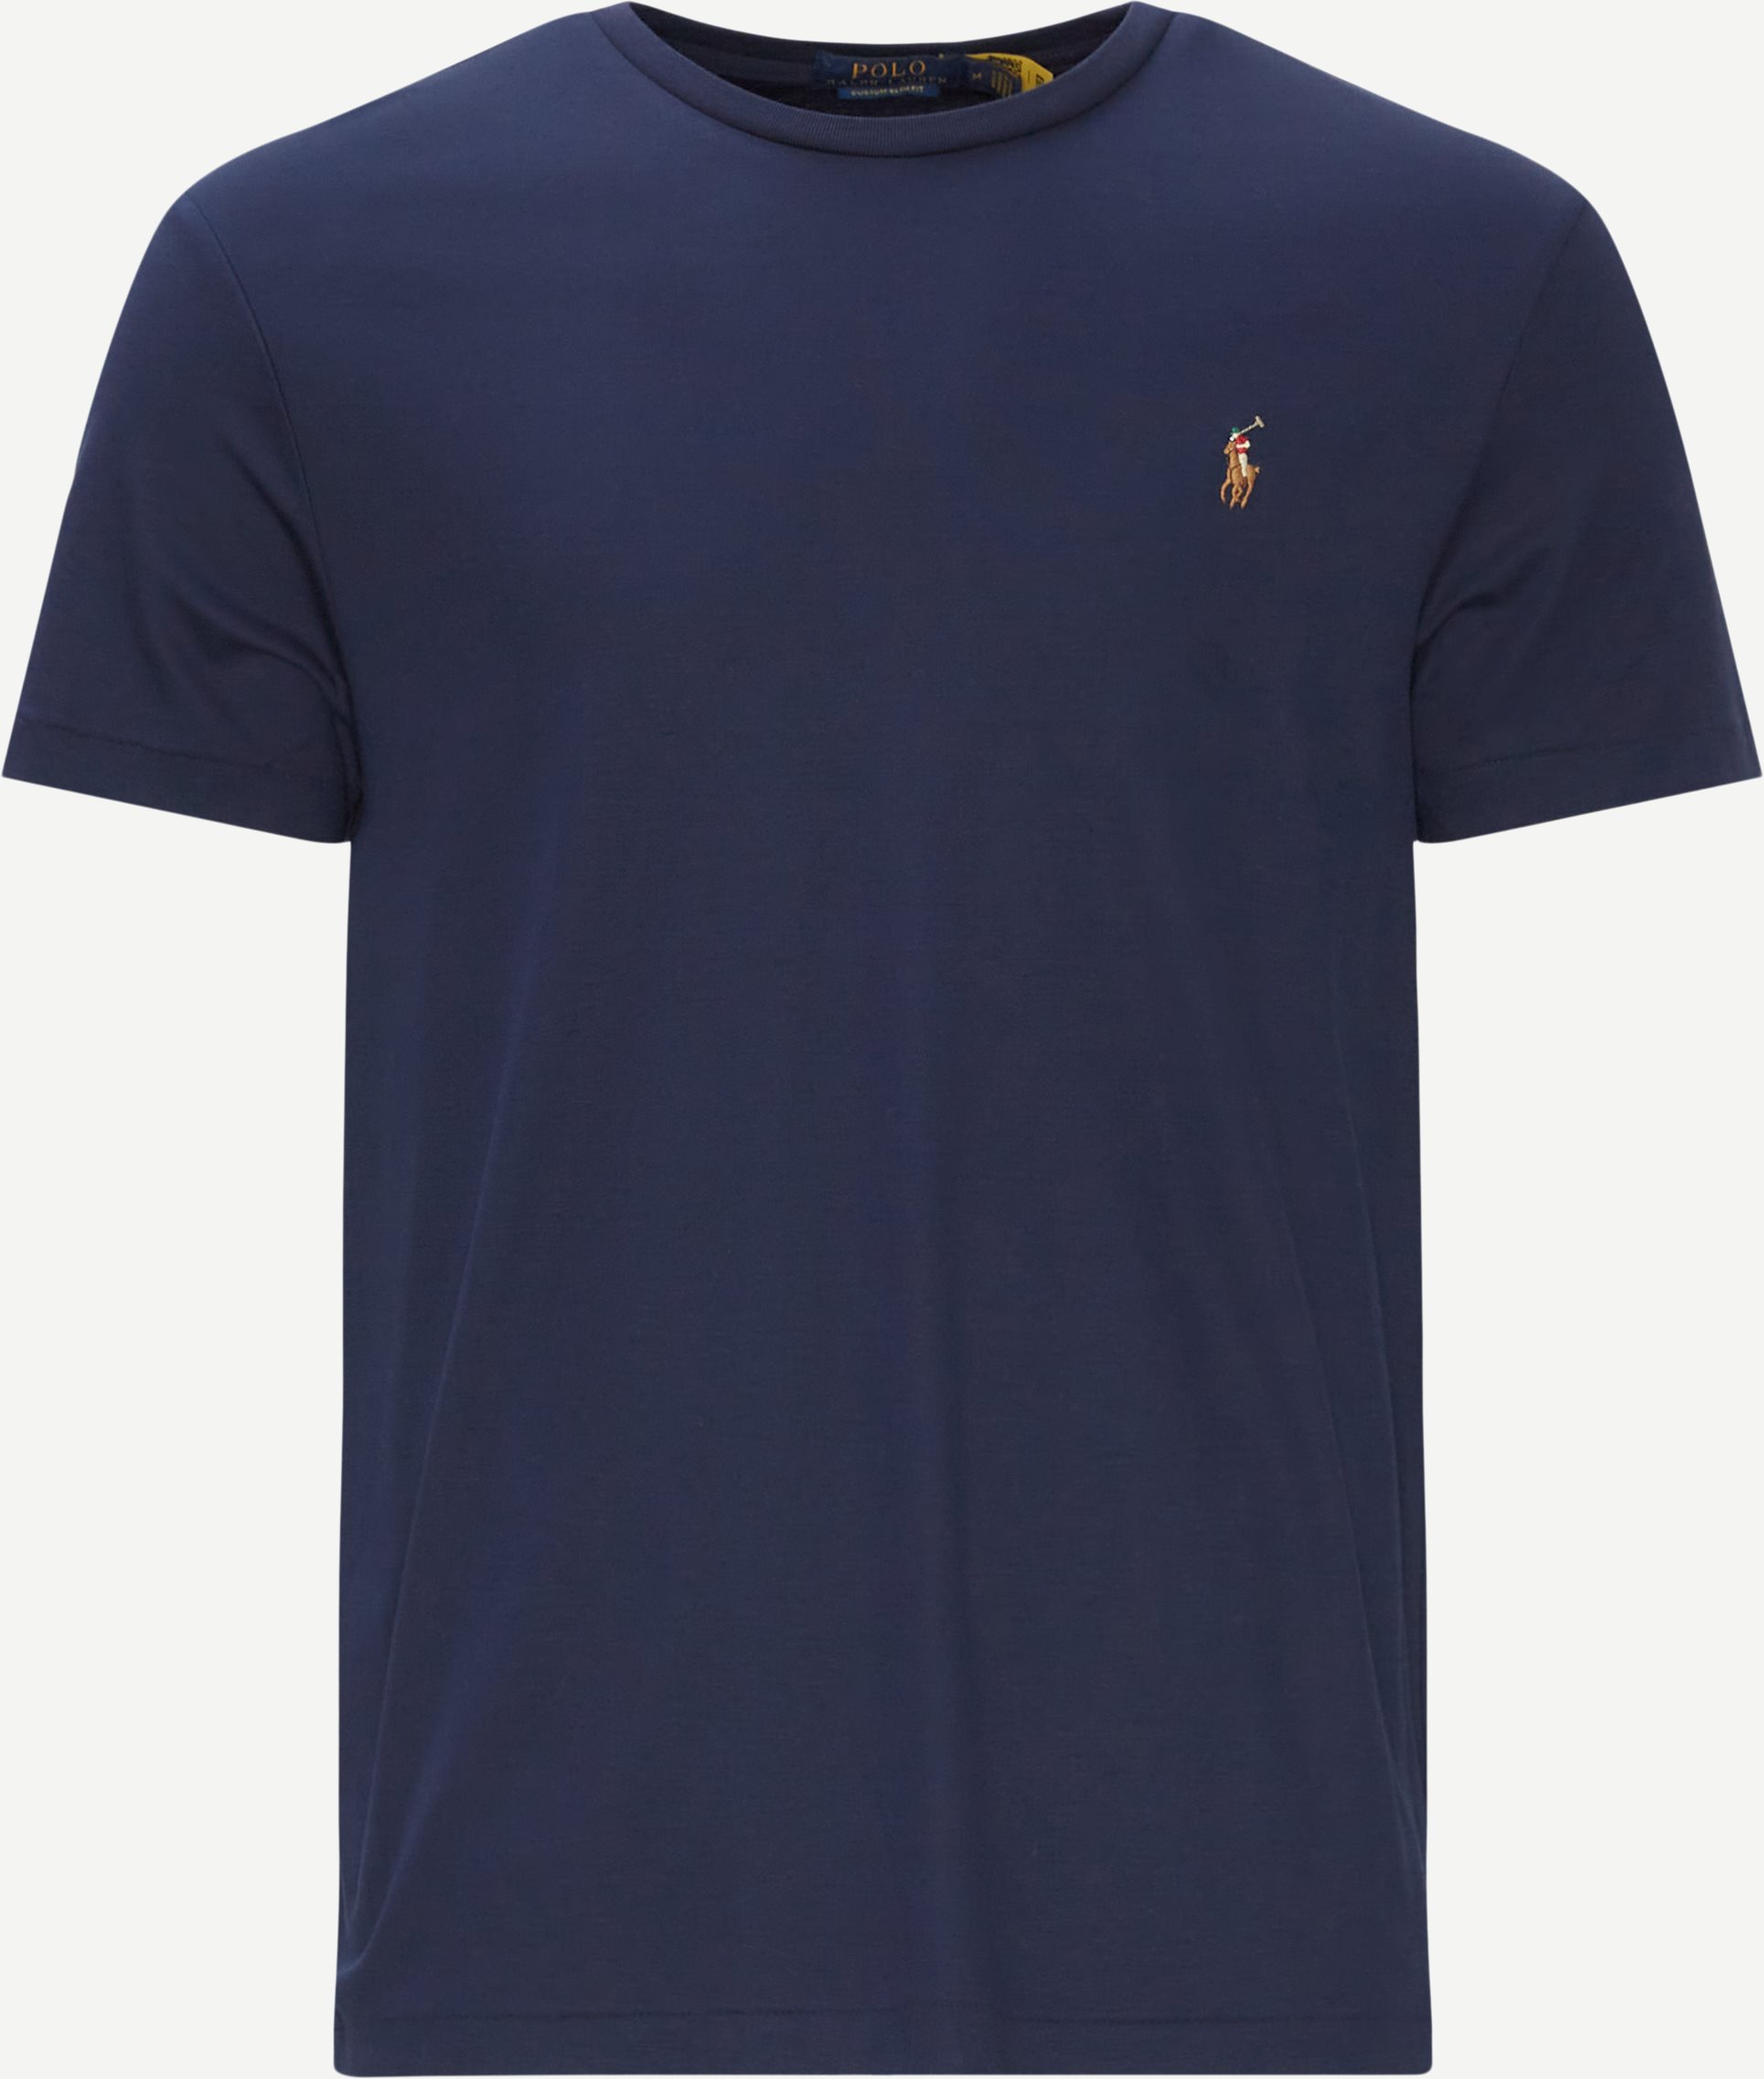 T-shirts - Regular slim fit - Blue